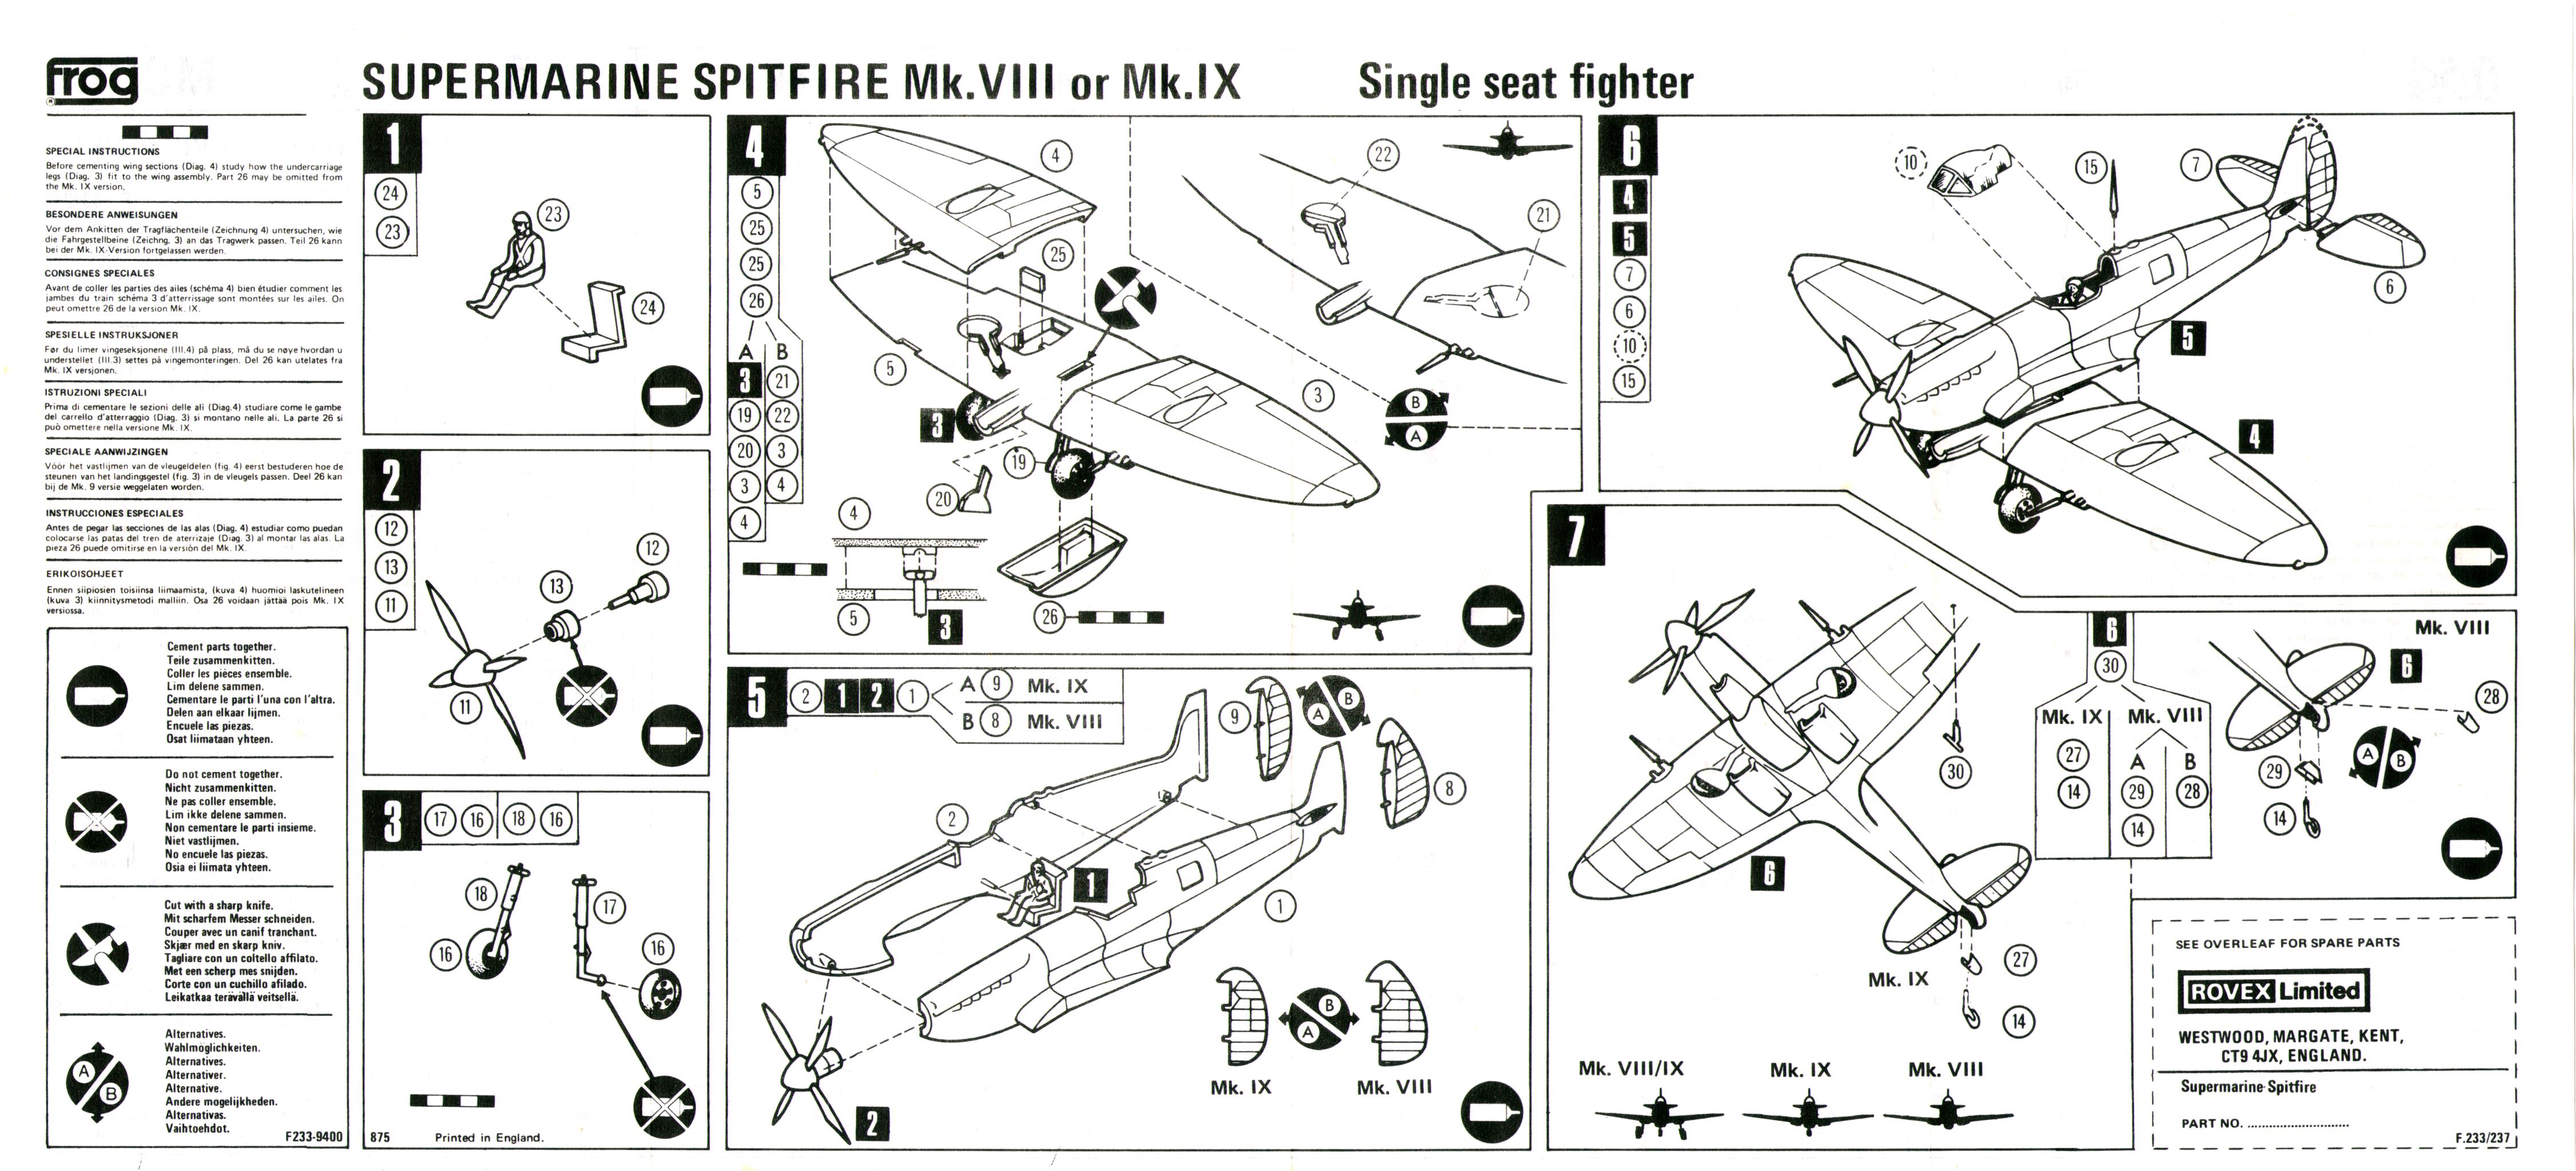 FROG Black series F233 Supermarine Spitfire F.Mk.8/9, Rovex Models & Hobbies, 1976 буклет инструкции